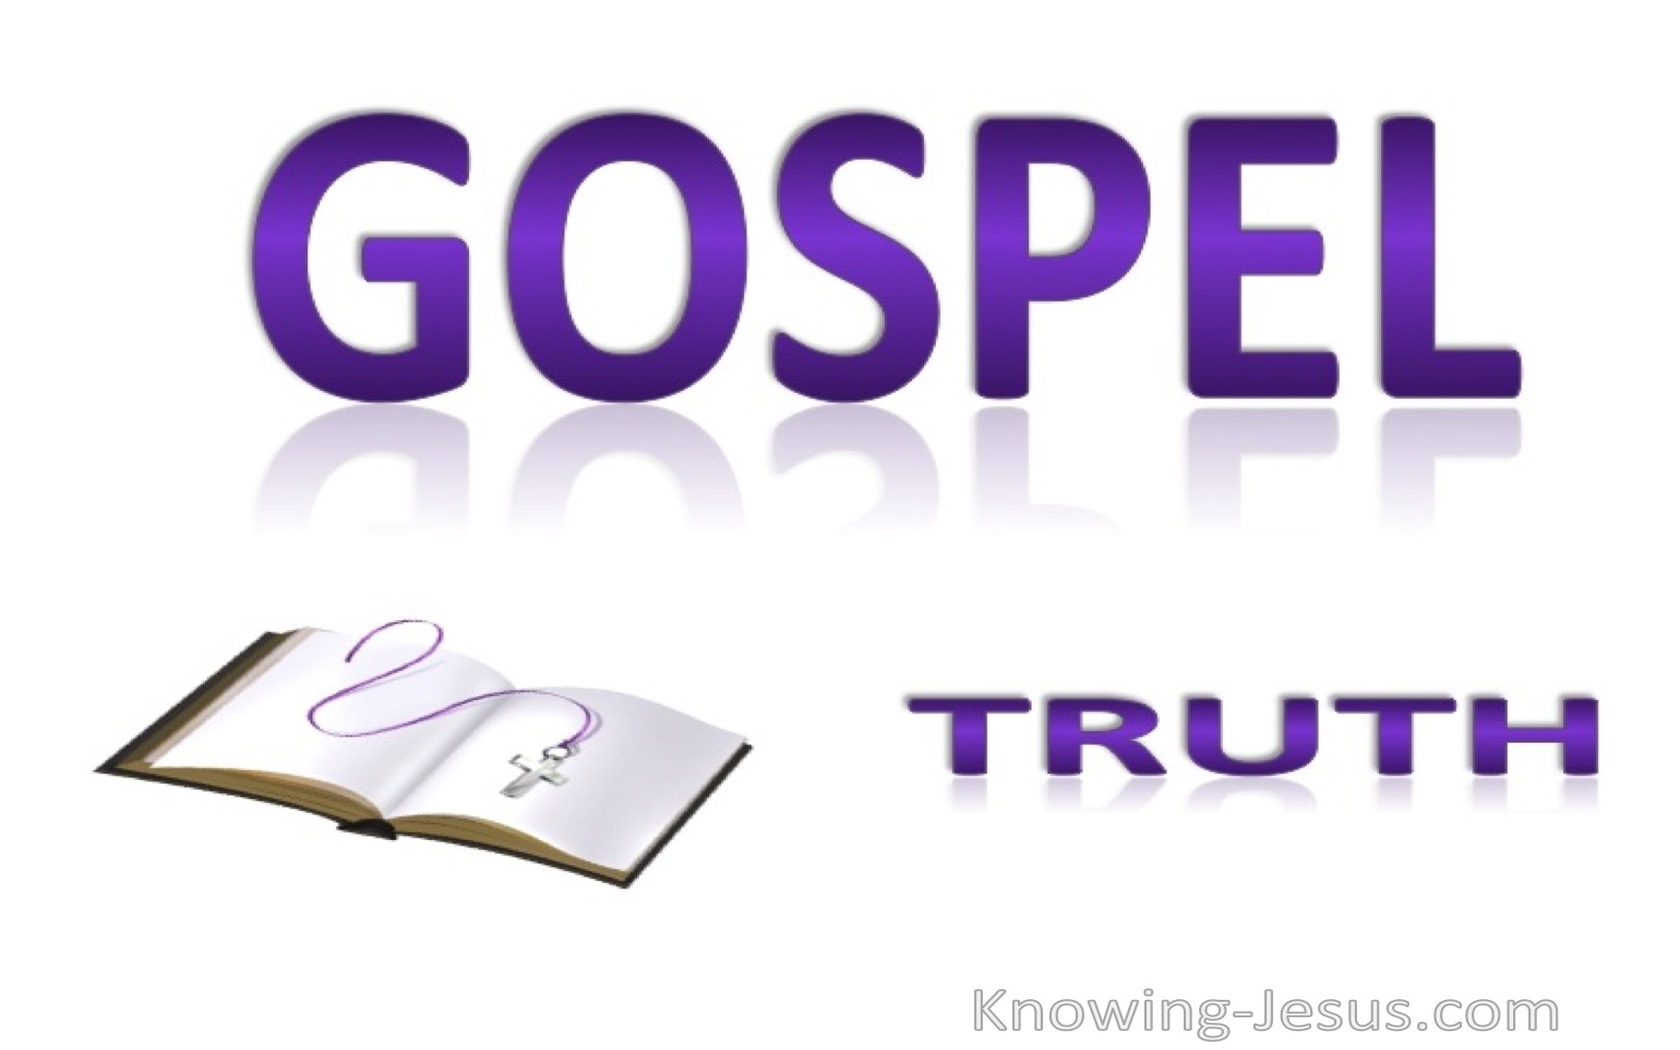 Gospel Truth (purple)